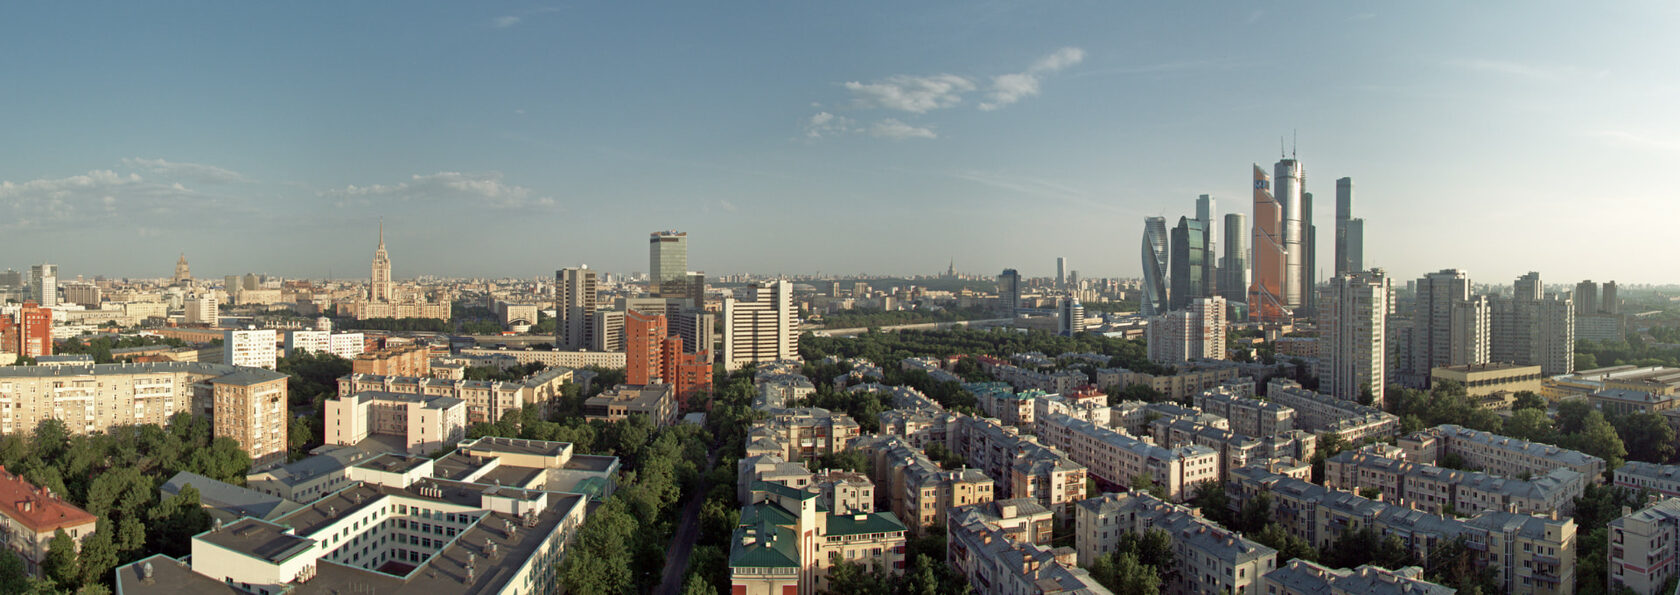 Панорама 5 этаж Москва